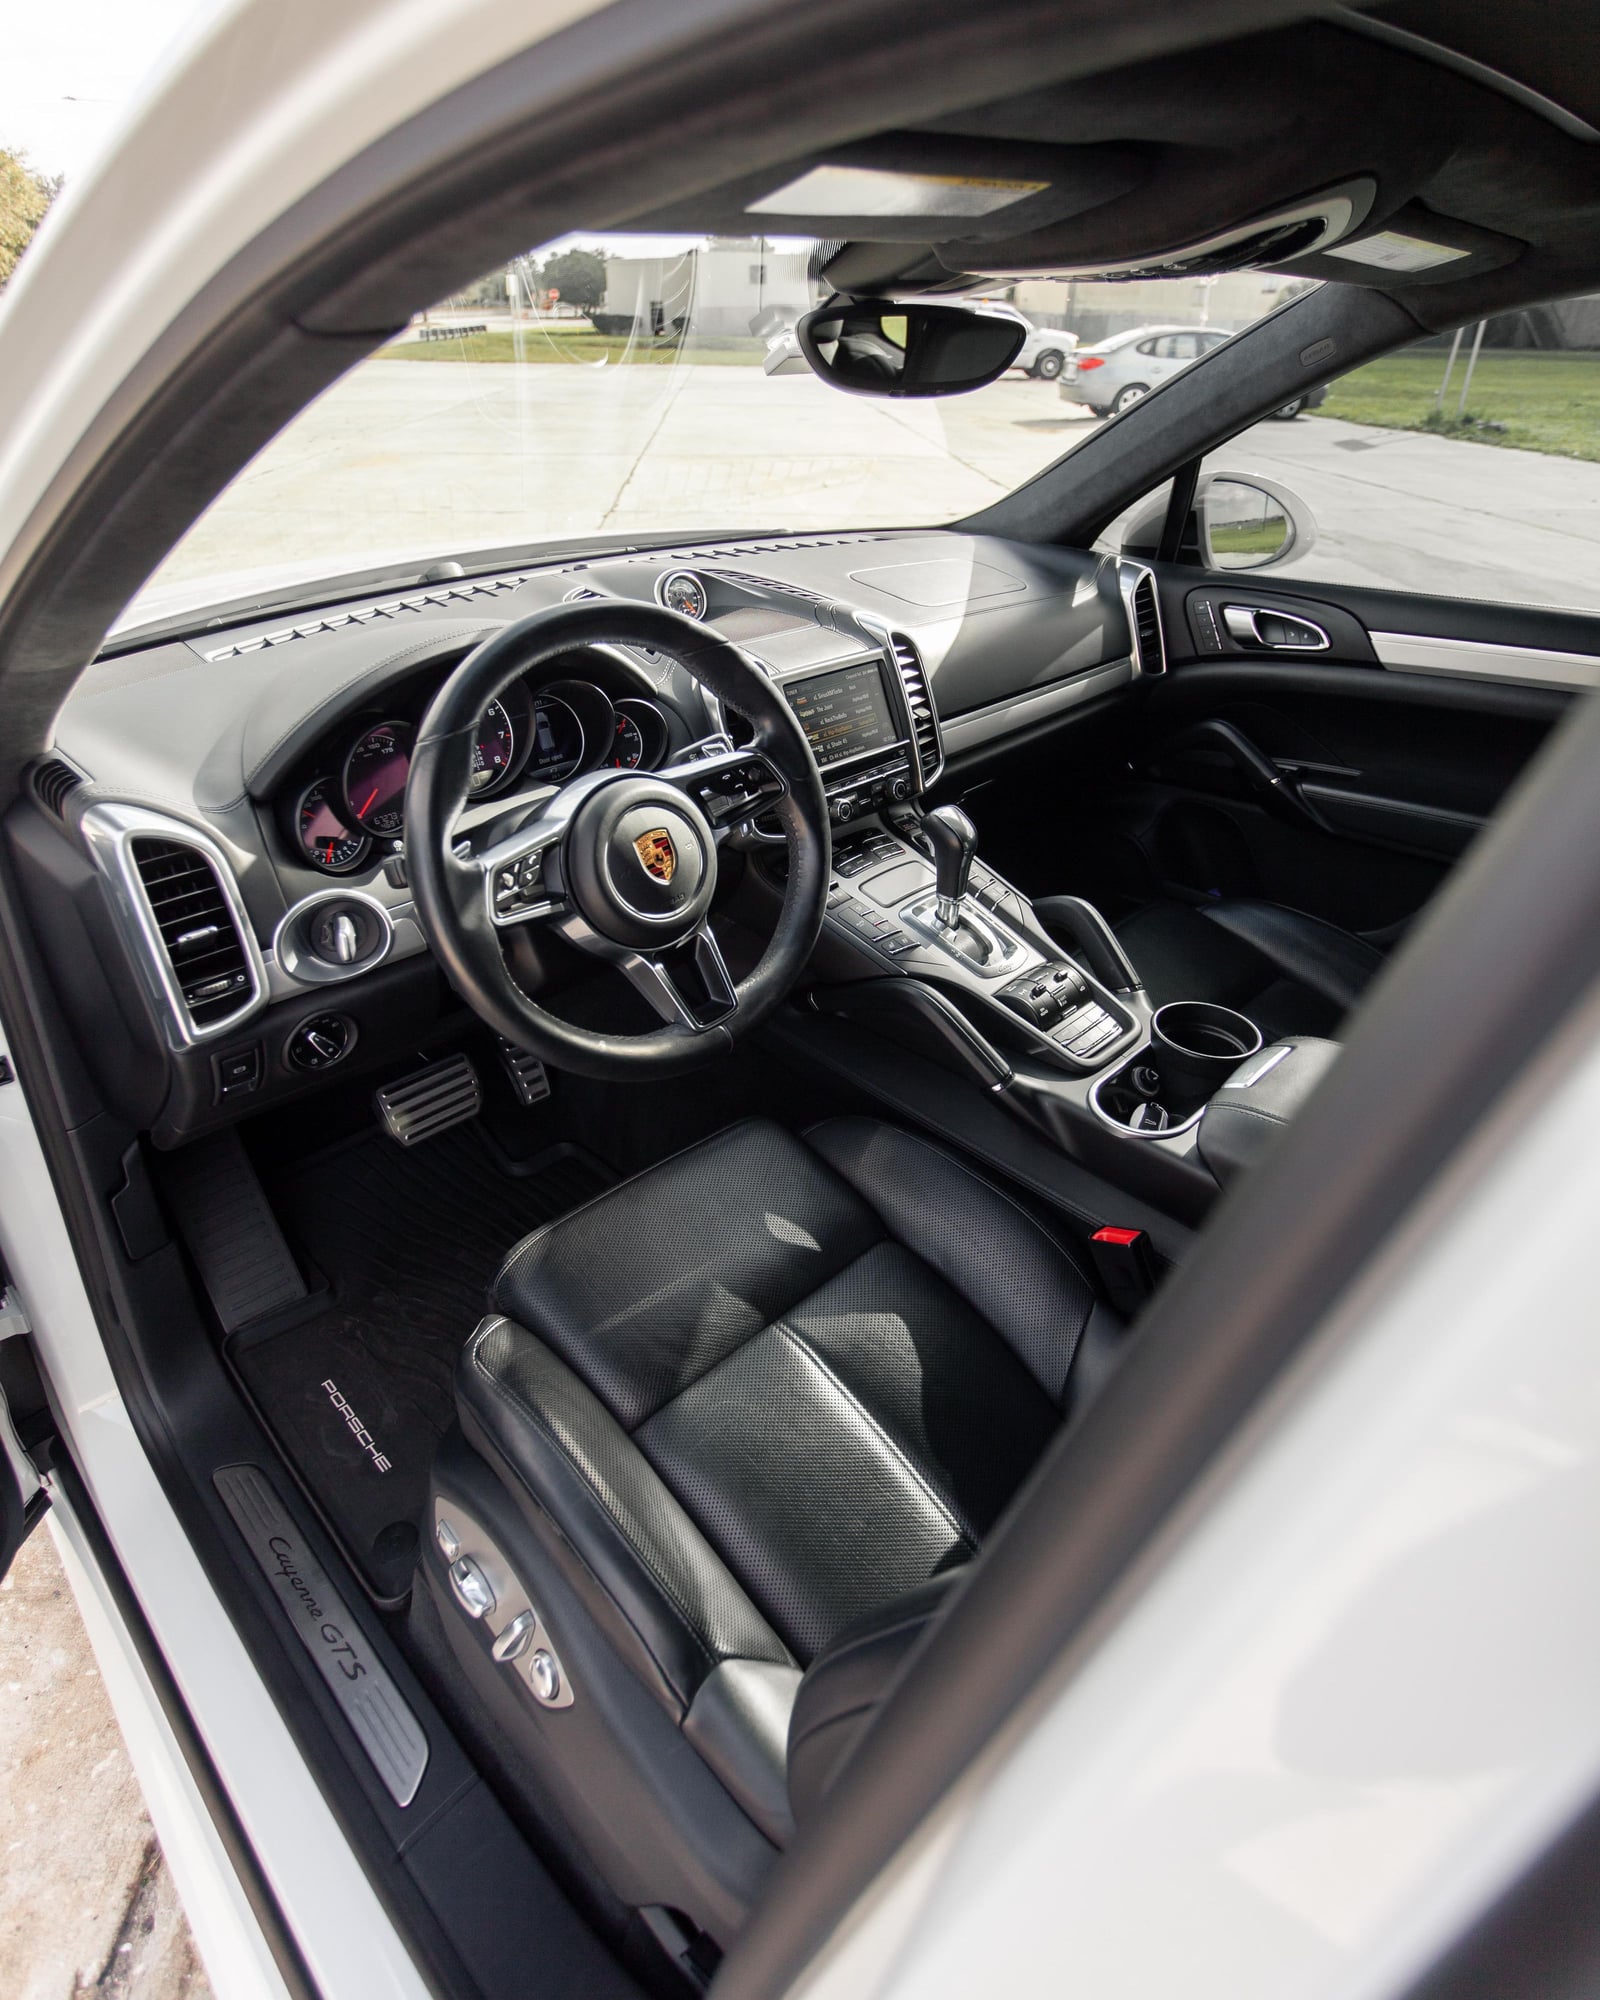 2016 Porsche Cayenne - 2016 Cayenne GTS - White with Black Interior - Used - VIN WP1AD2A2XGLA7771 - 70,400 Miles - 6 cyl - AWD - Automatic - SUV - White - Orlando, FL 32824, United States